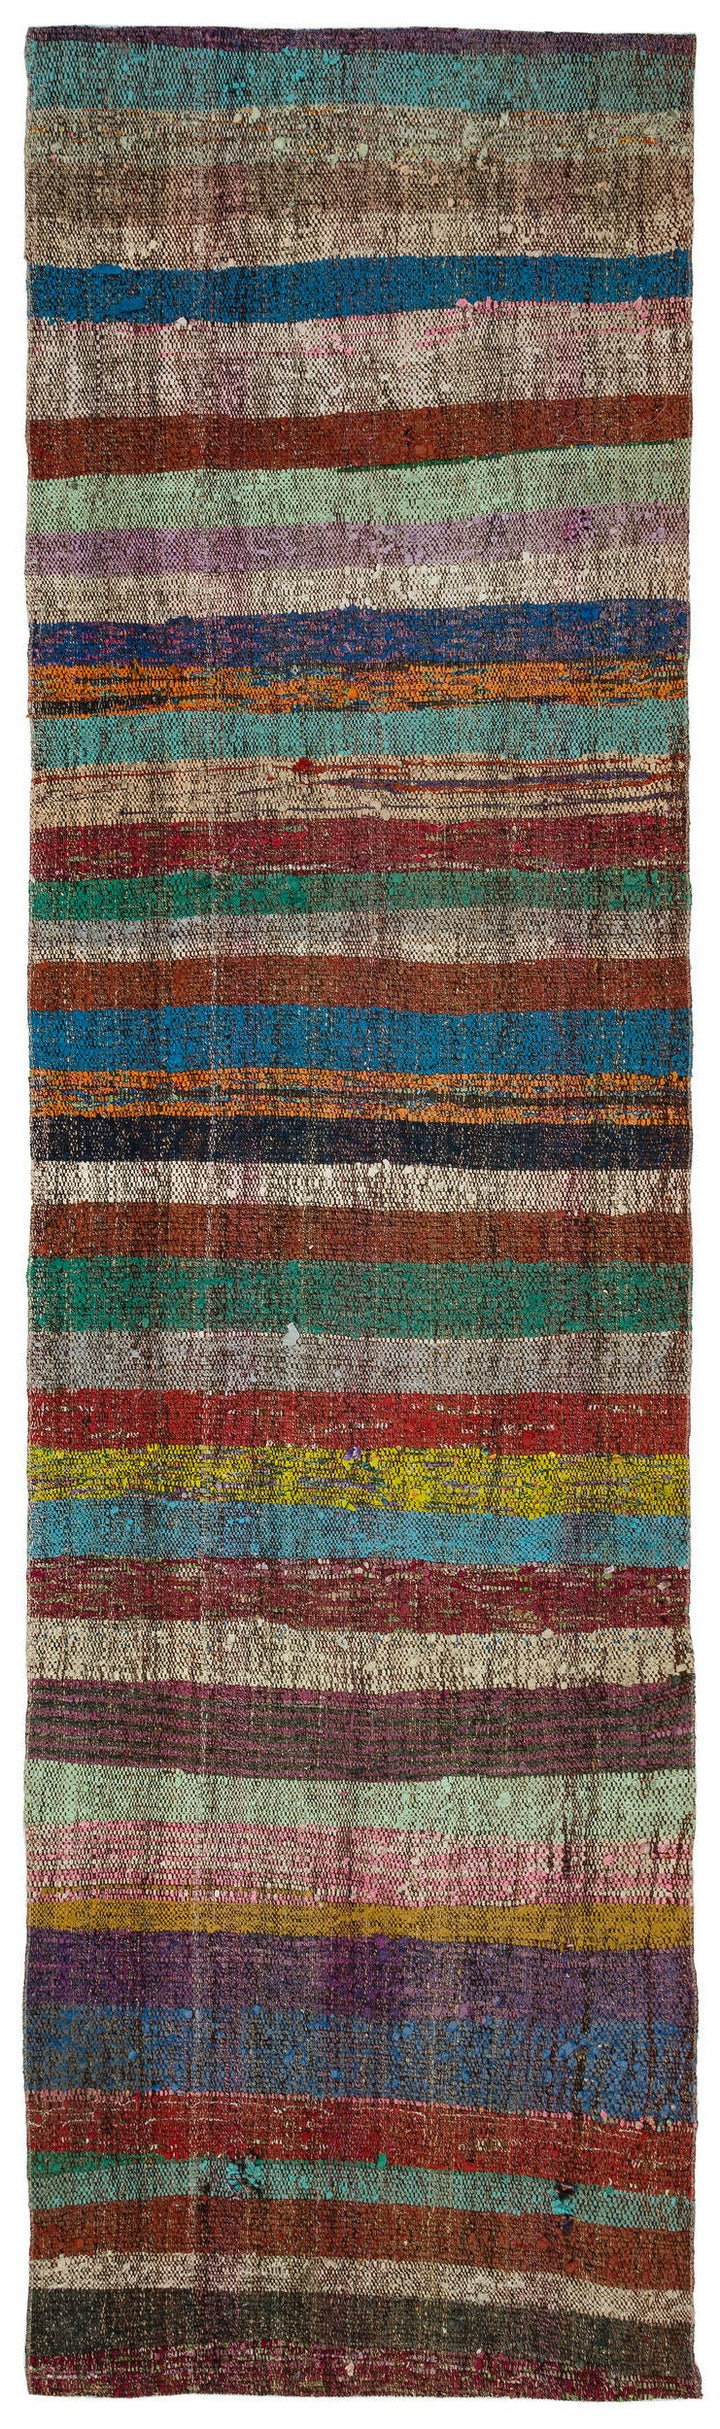 Cretan Brown Striped Wool Hand-Woven Carpet 096 x 340